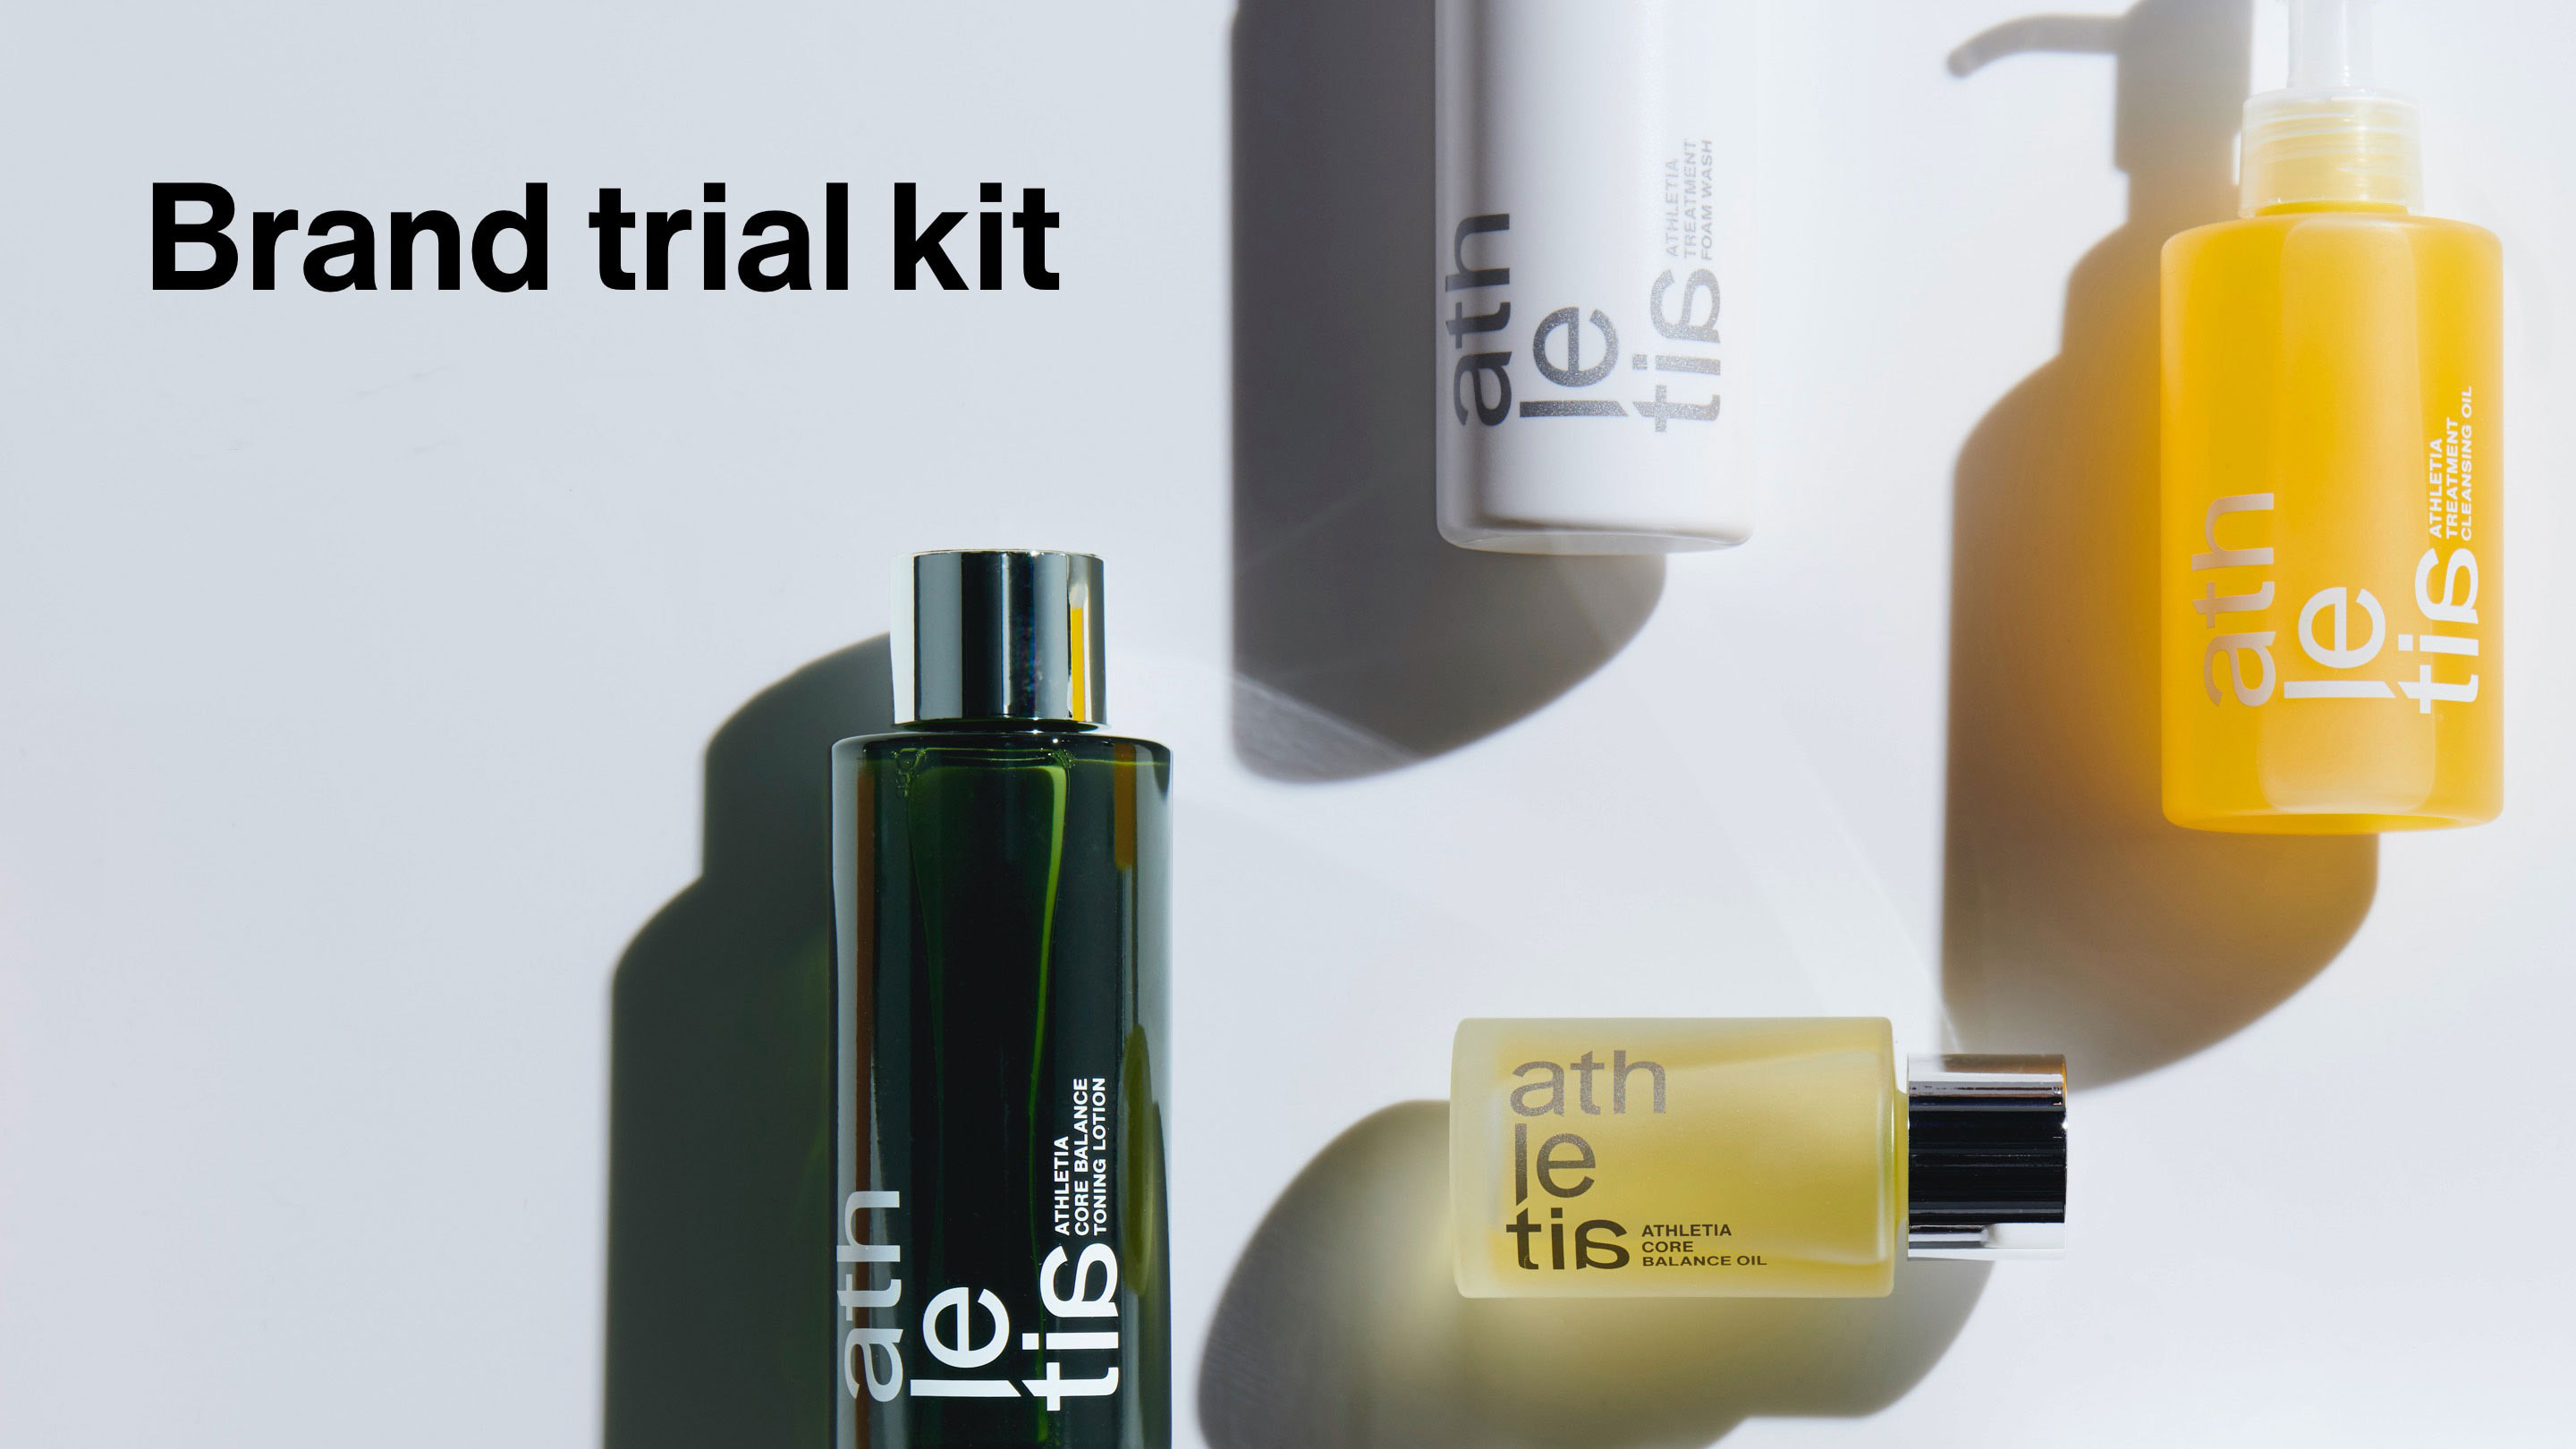 Brand trial kit